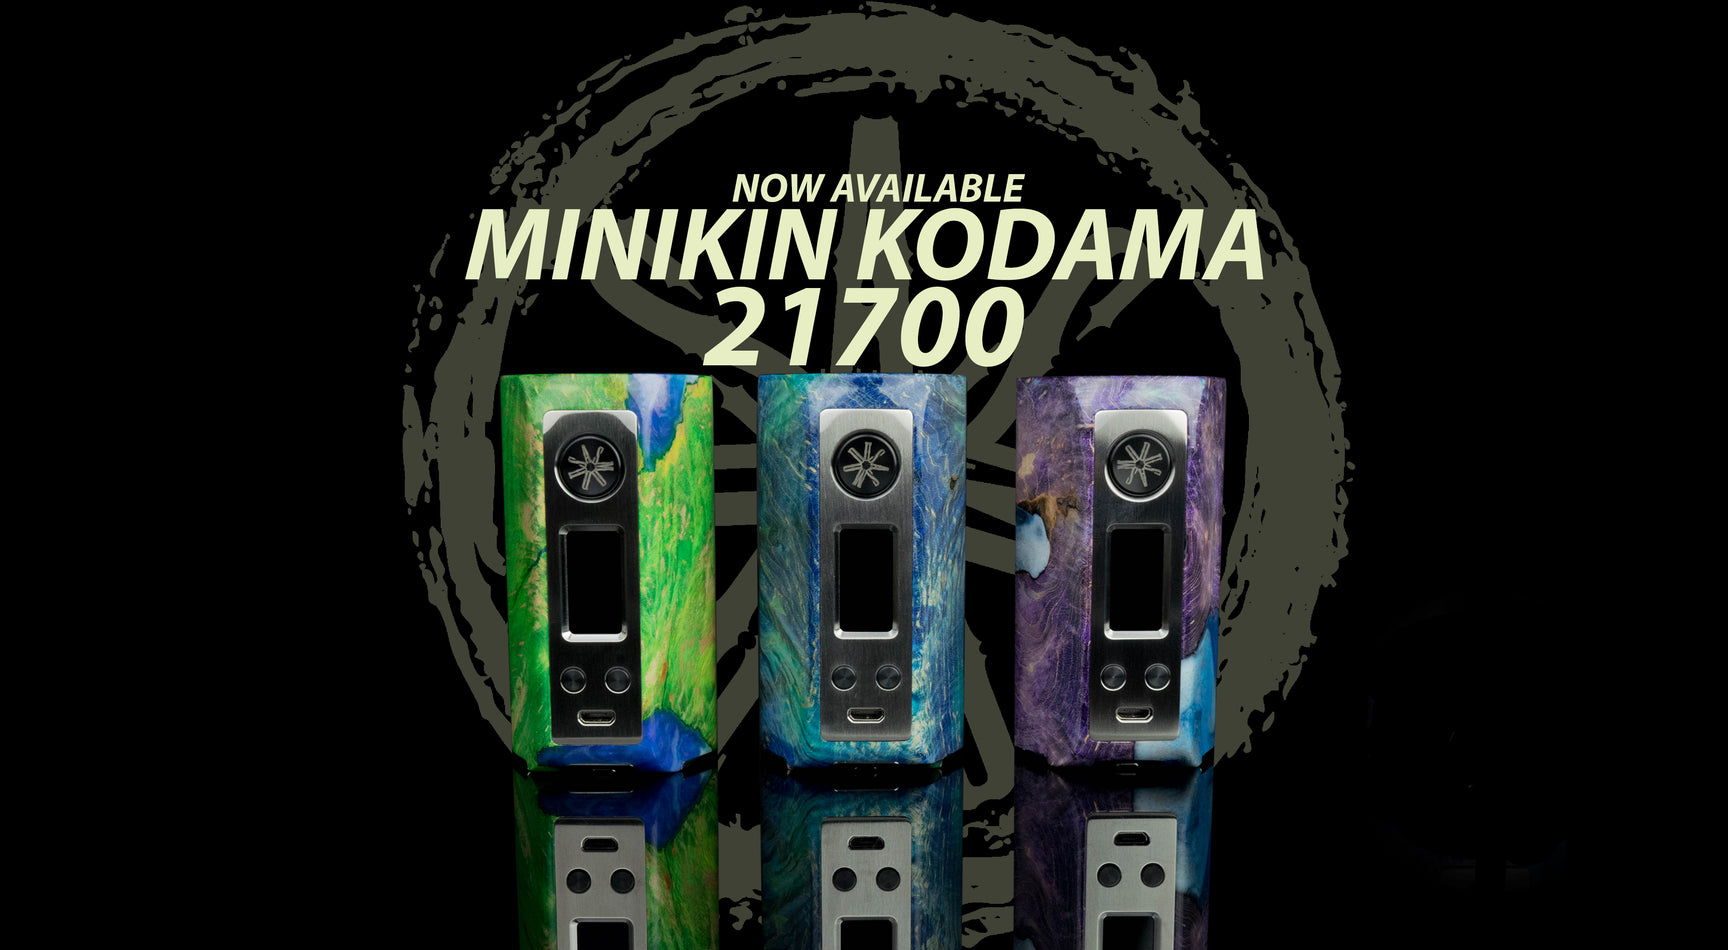 Minikin_Kodama_21700_Retail_Banner_copy_1728x.jpg